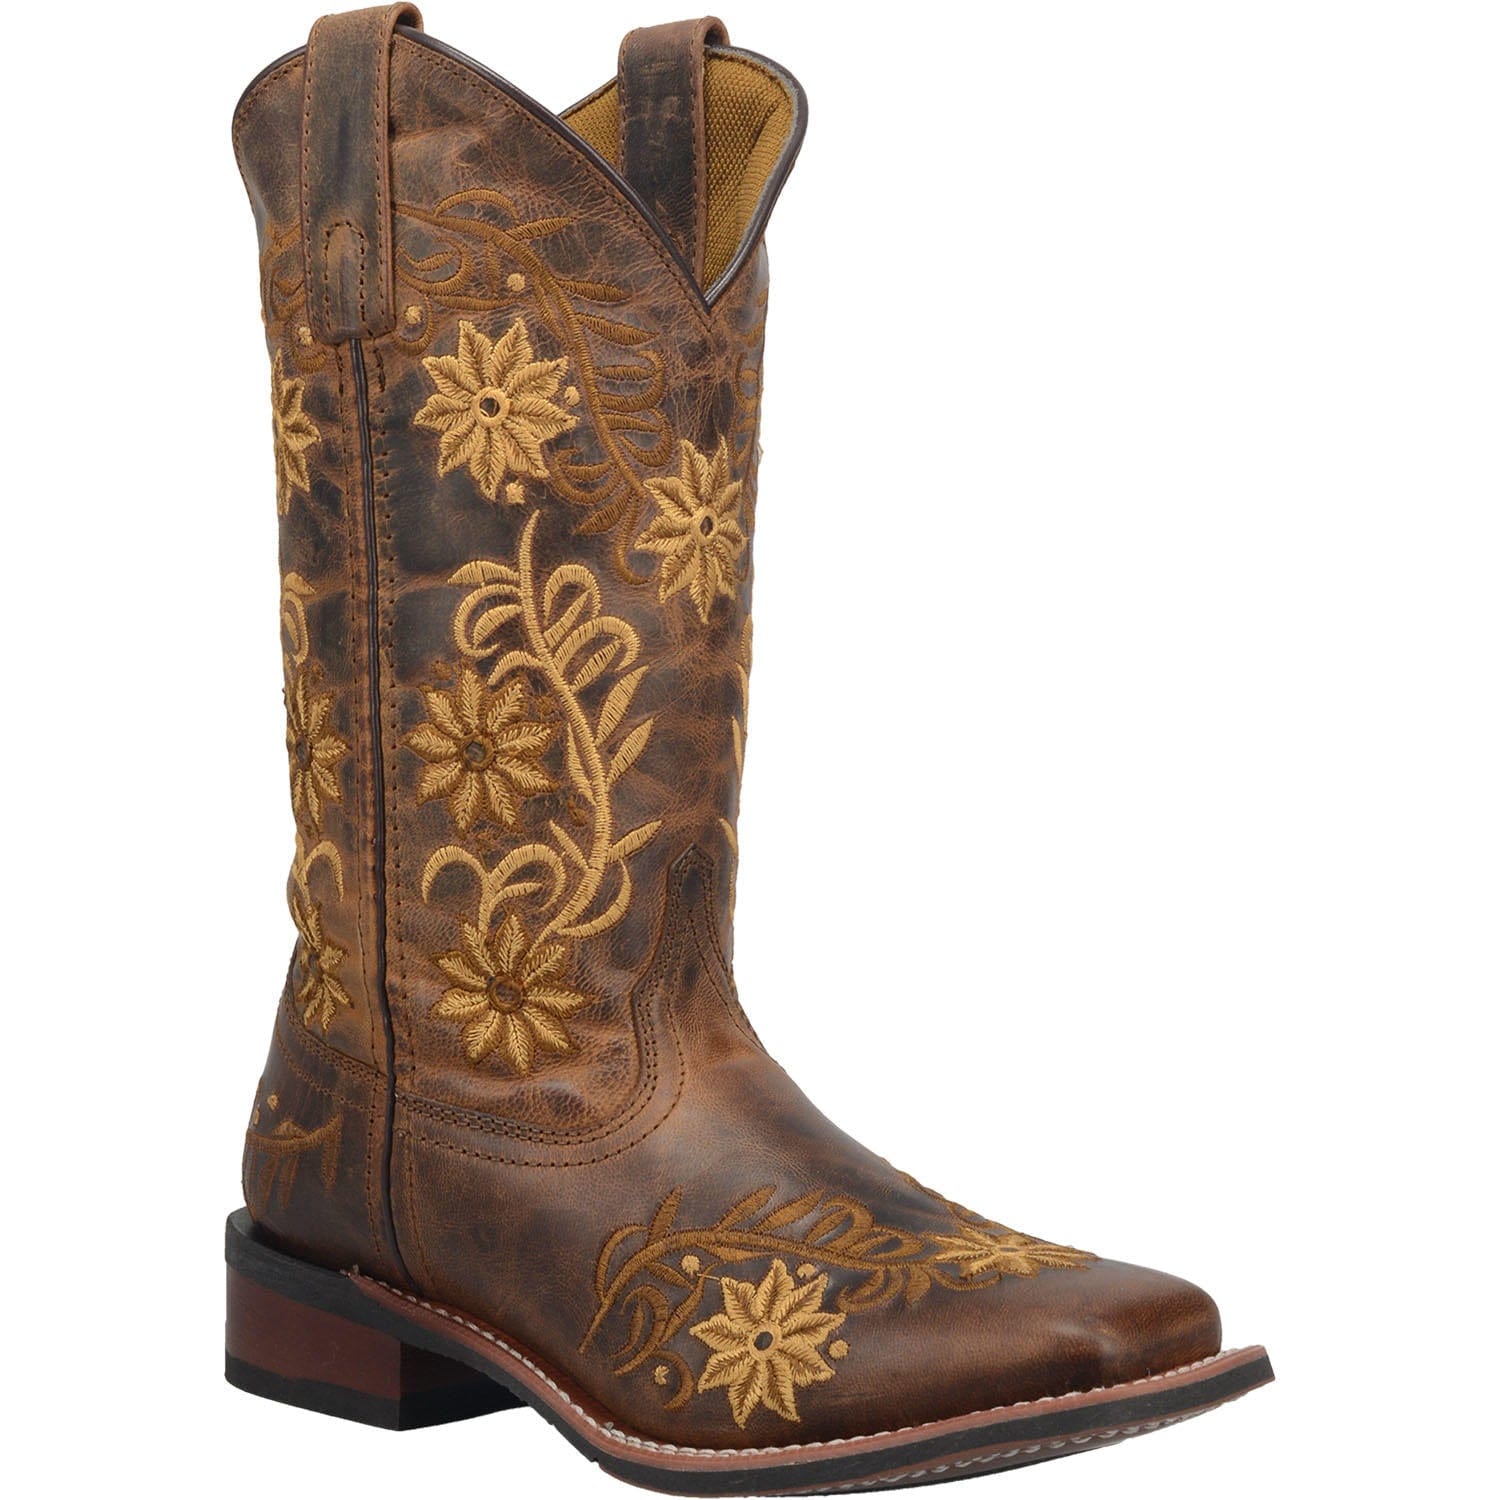 LAREDO Boots Laredo Women's Secret Garden Brown Leather Cowgirl Boots 5822